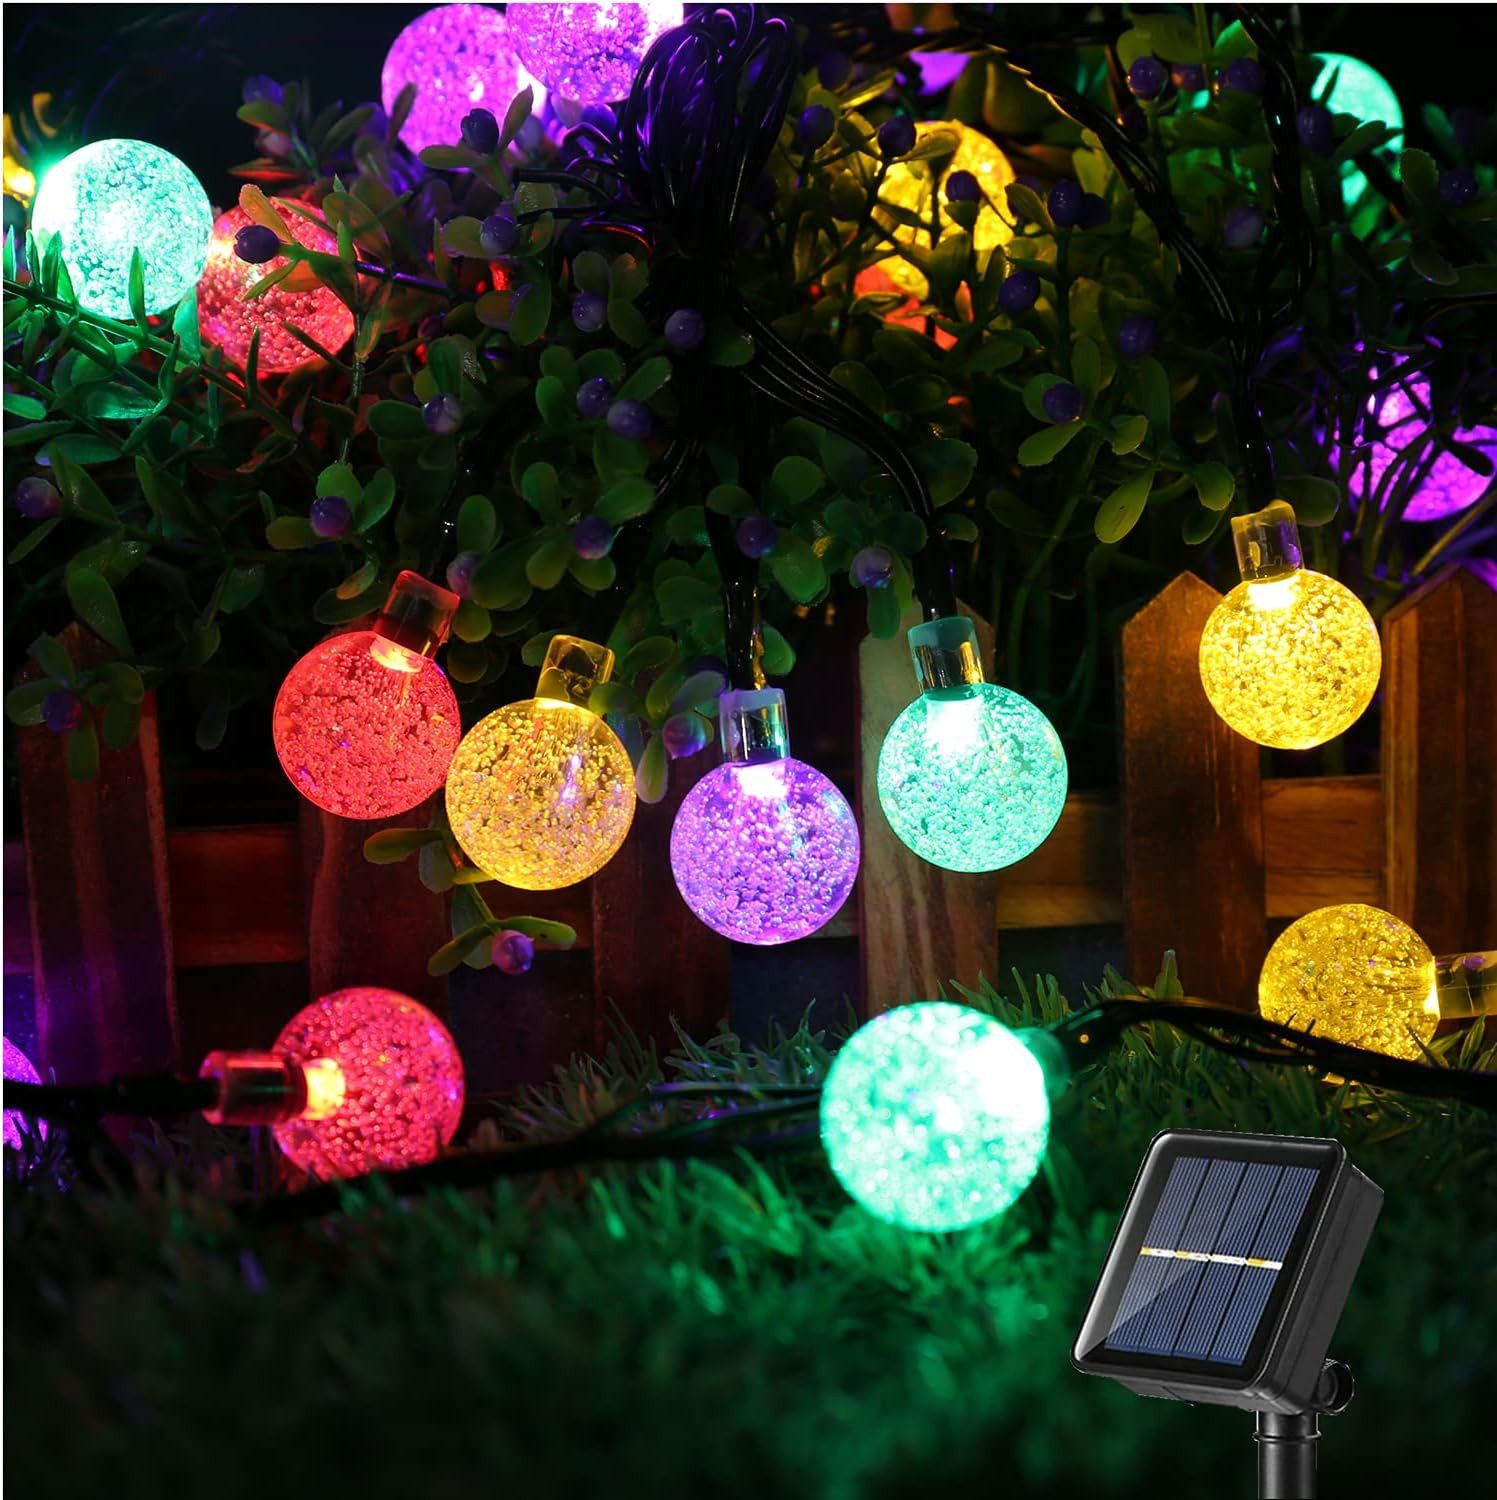 BlingBin LED Solarleuchte Solar Lichterkette Aussen 50 LED Knistern Kristall Kugeln, Dekorationen, LED fest integriert, Warmweiß/Bunt, 7m 8 Modi IP65 Wasserdicht Beleuchtung für Garten, Bäume